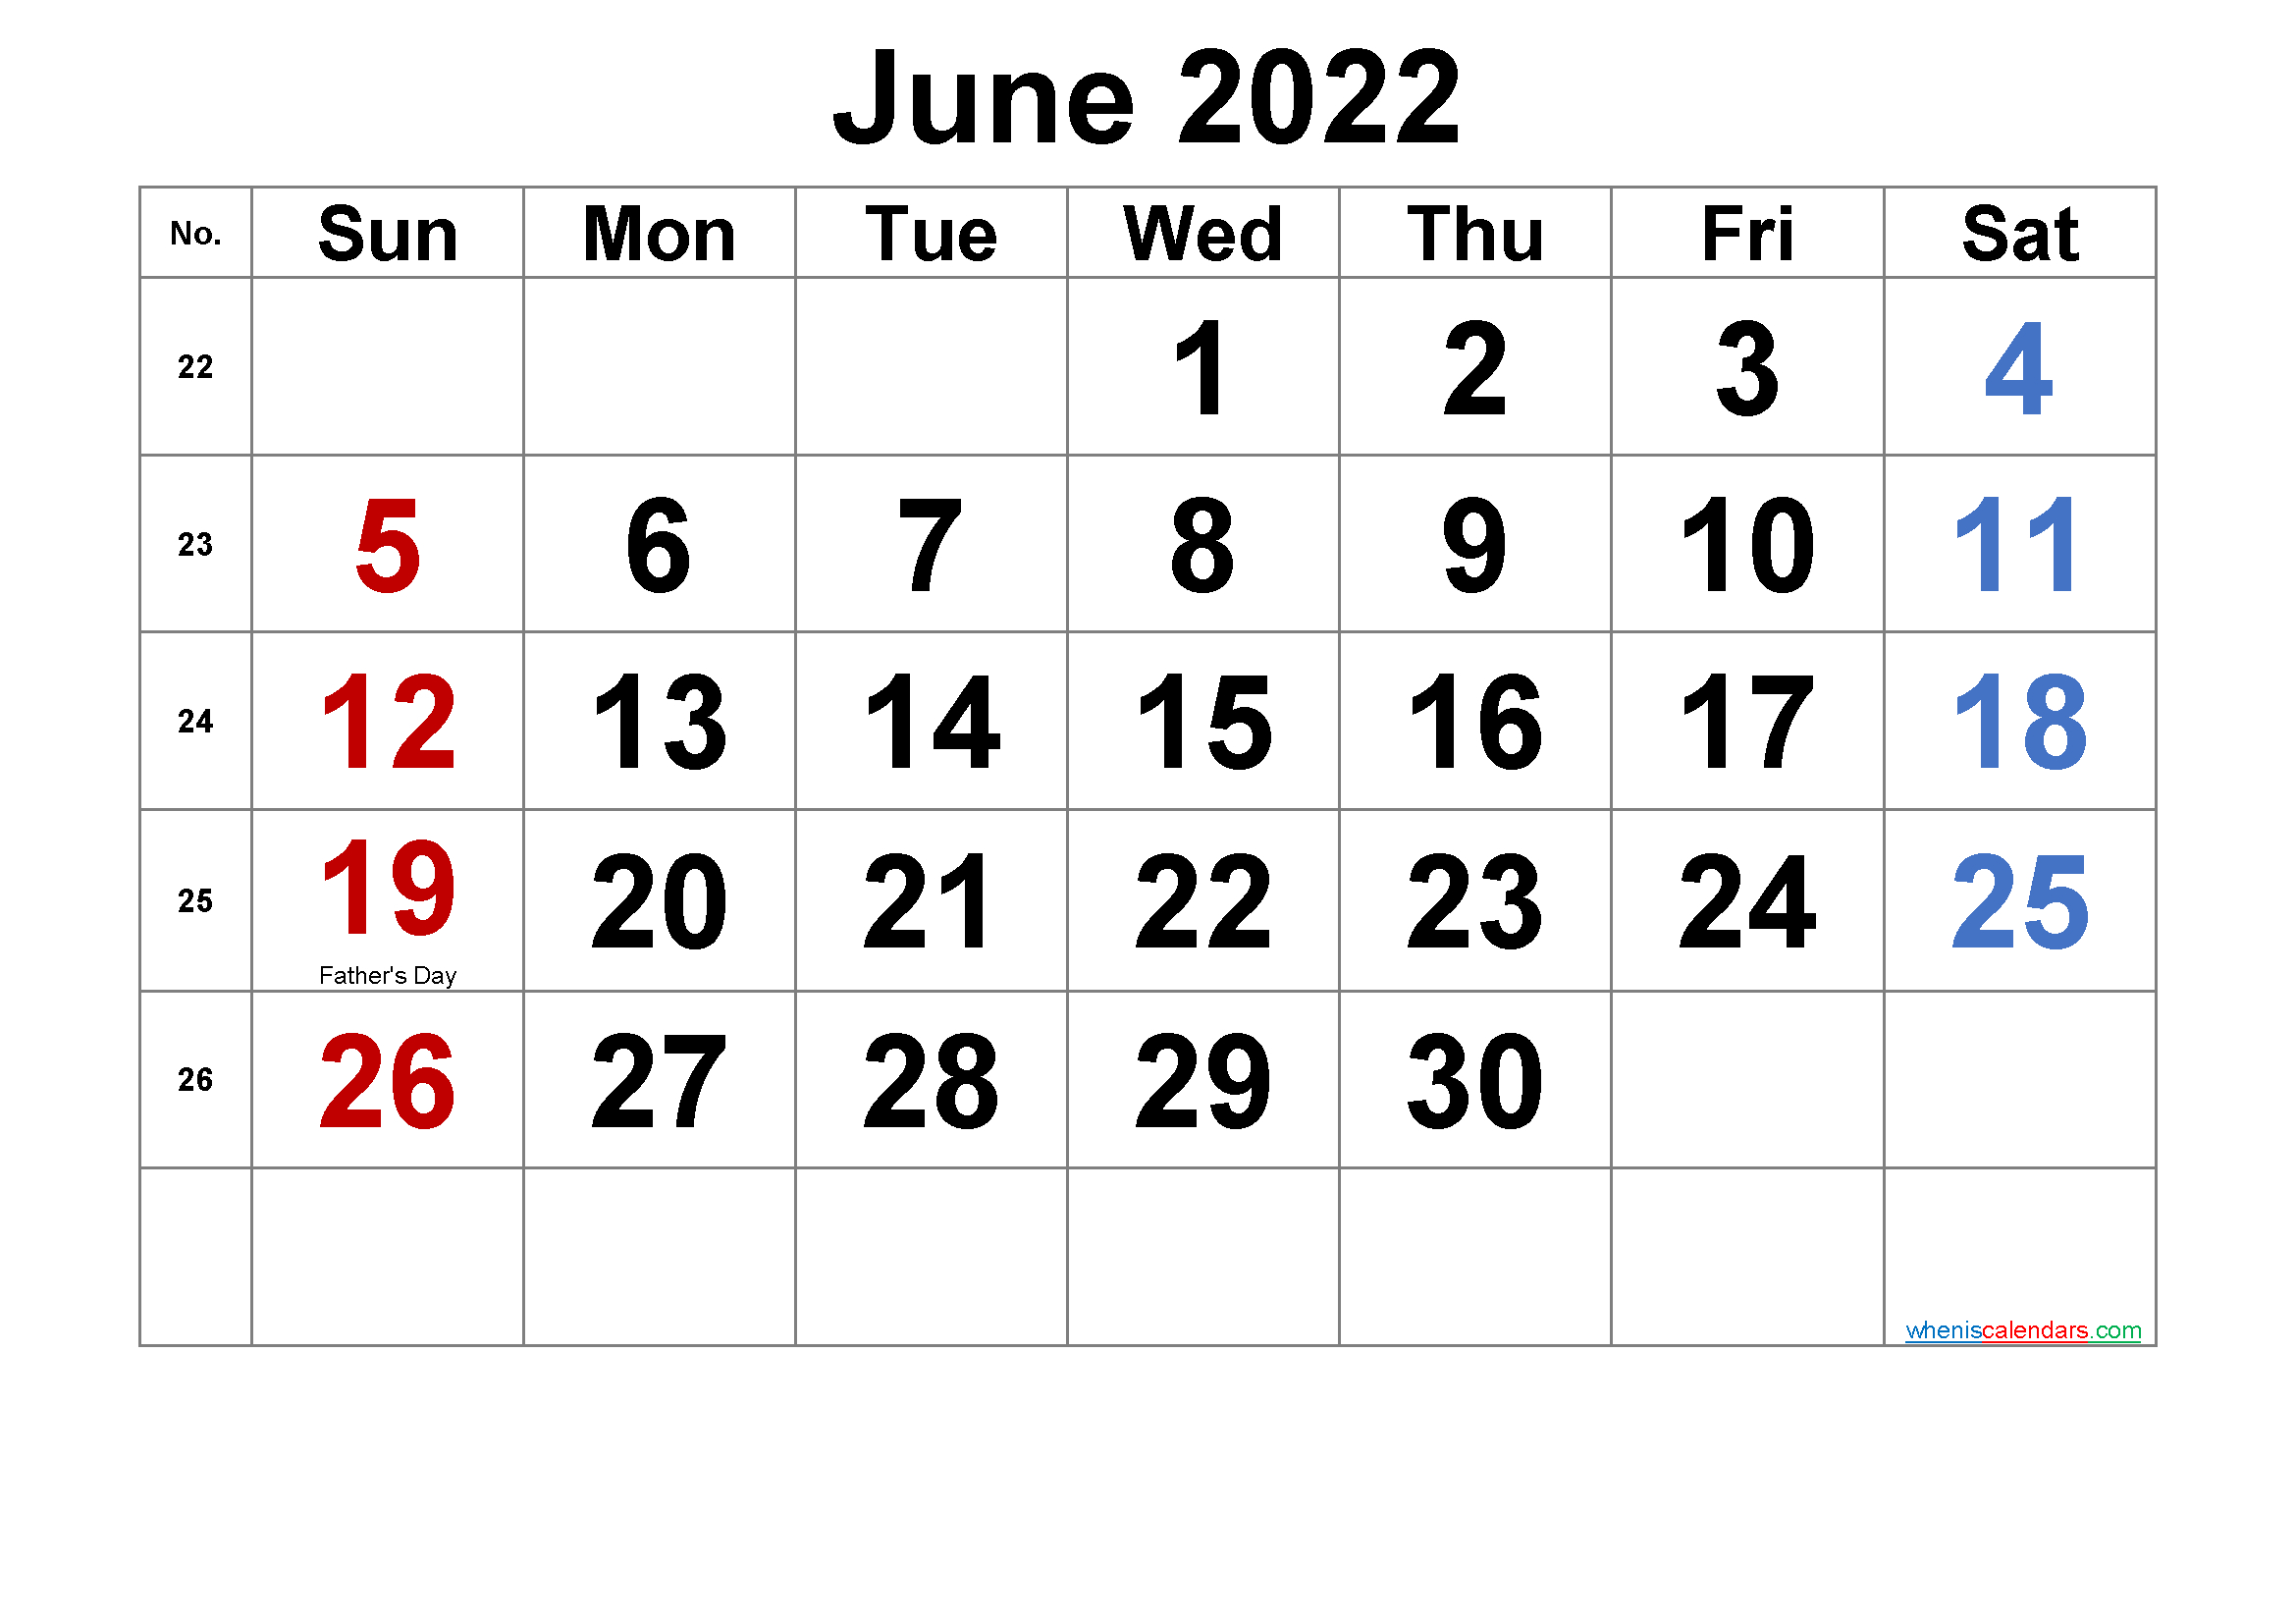 Free Printable June 2022 Calendar With Holidays